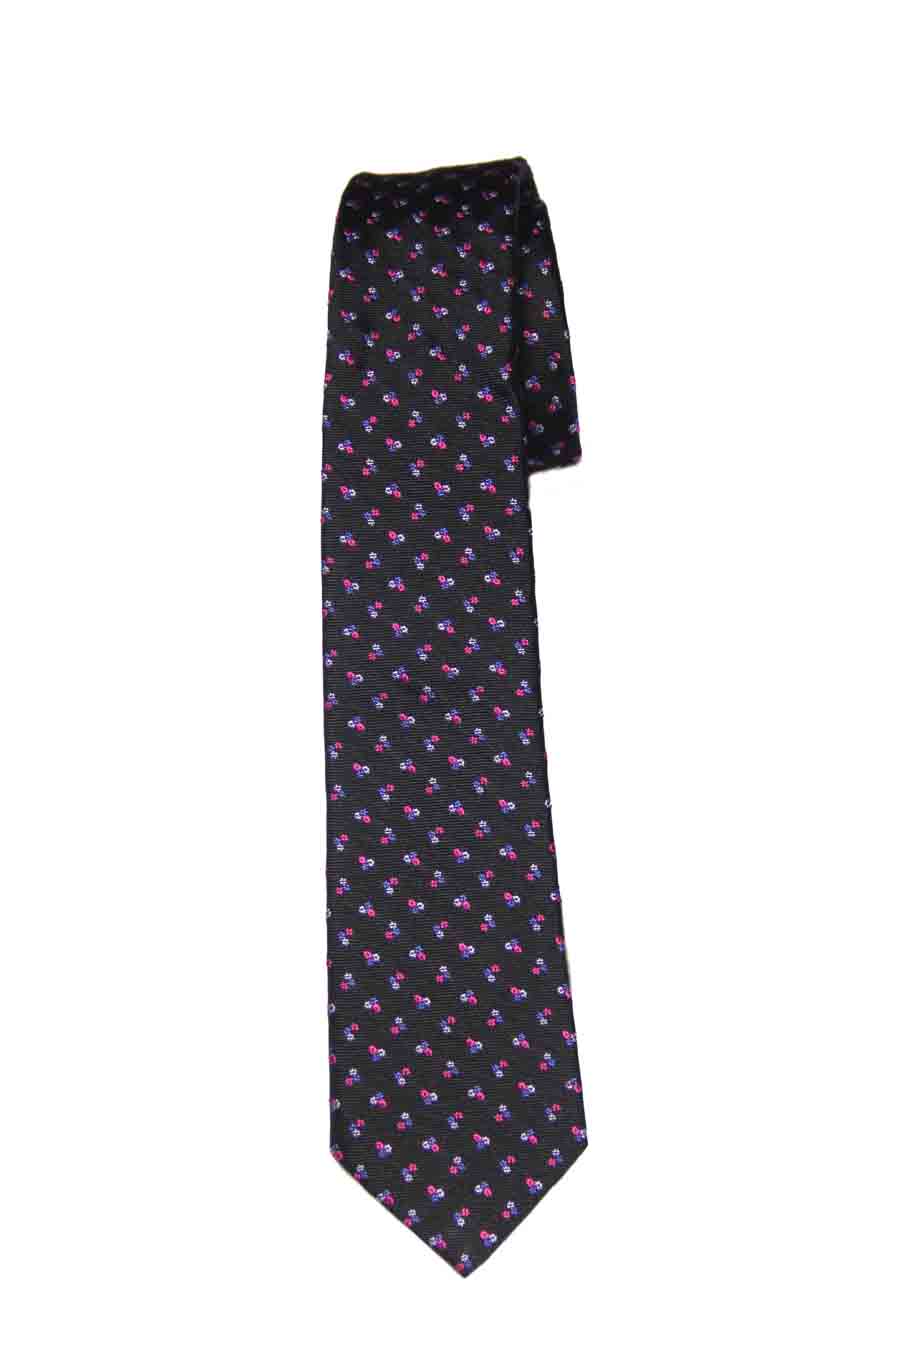 Paul Smith London Italian Silk Tie Black Pink Blue White Floral Short Narrow Men's